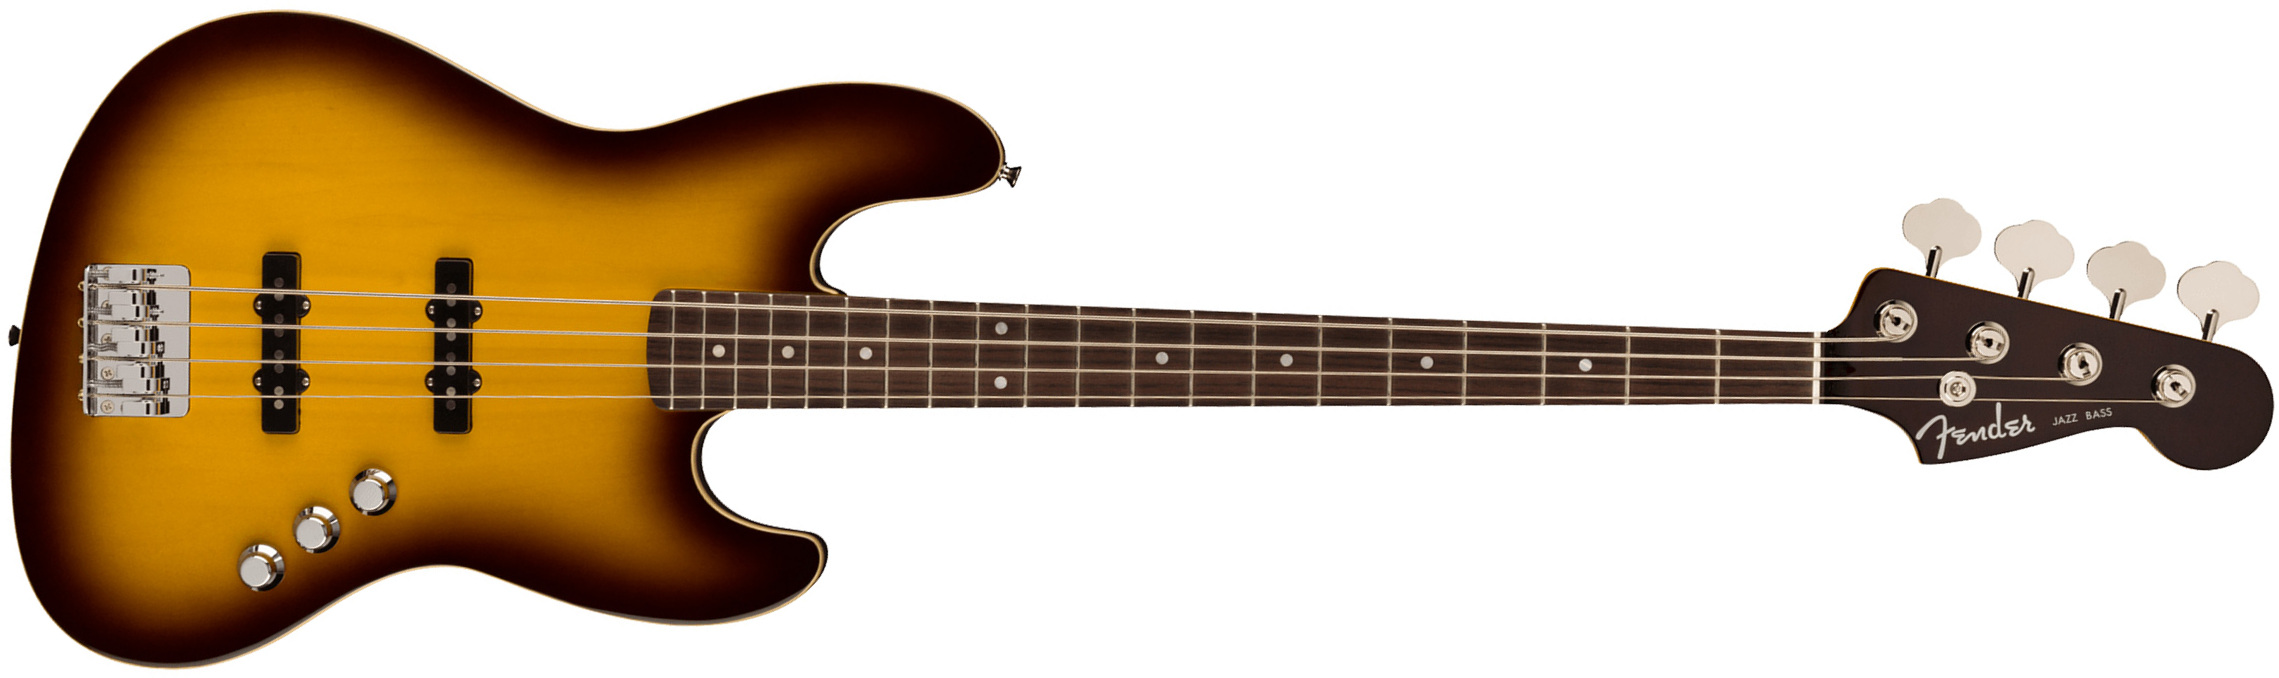 Fender Jazz Bass Aerodyne Special Jap Rw - Chocolate Burst - Basse Électrique Solid Body - Main picture